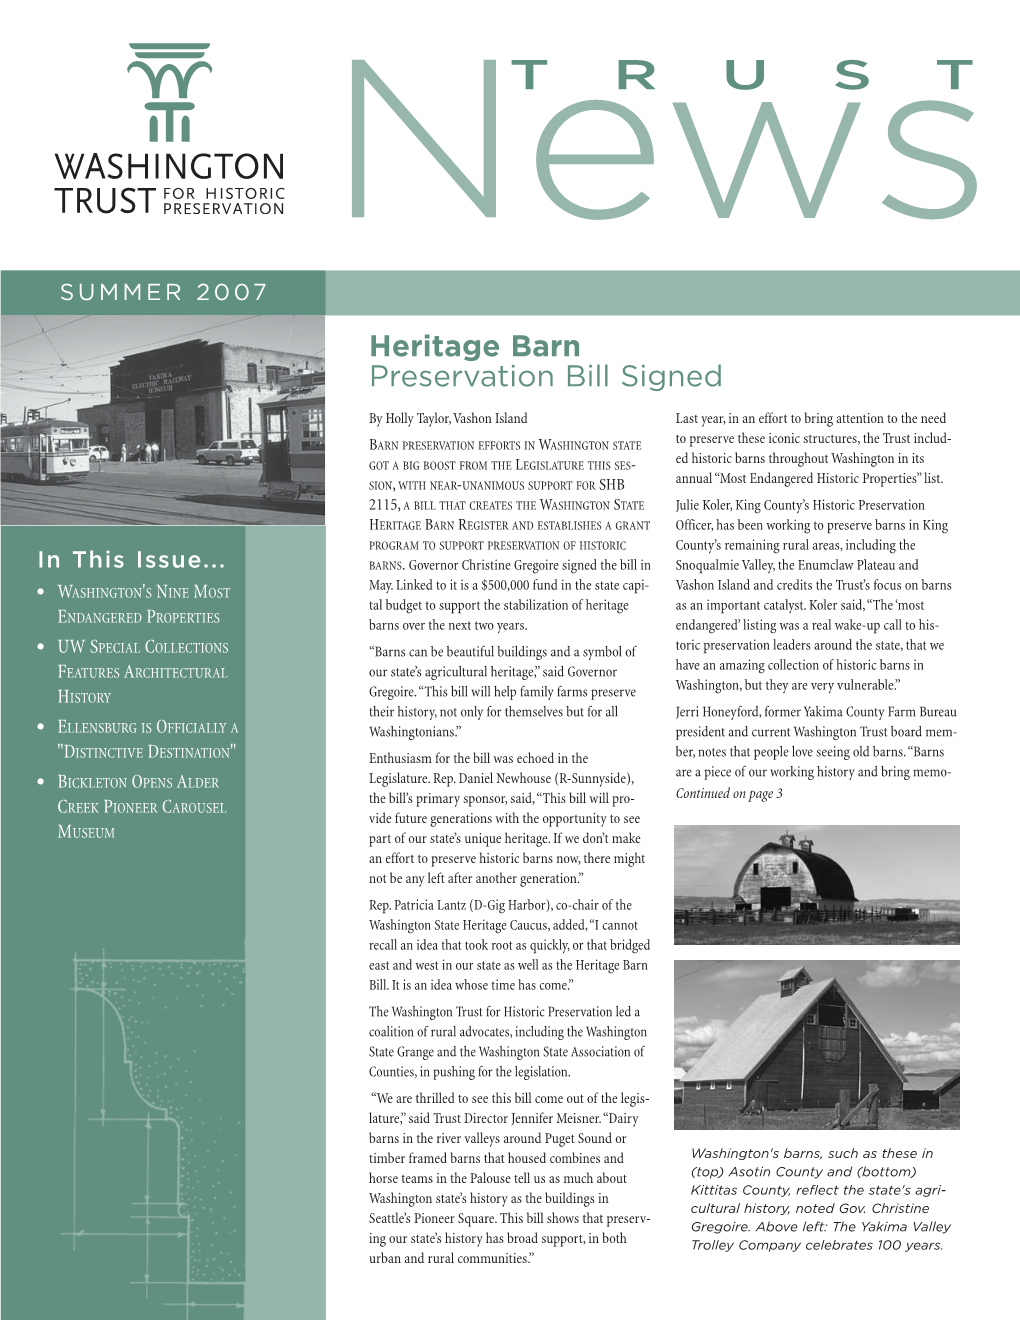 Heritage Barn Preservation Bill Signed